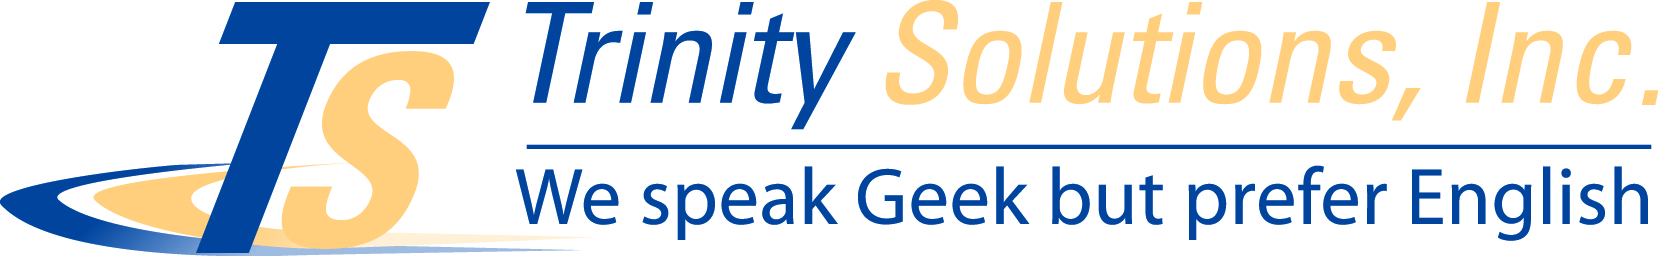 Trinity Solutions, Inc. Logo